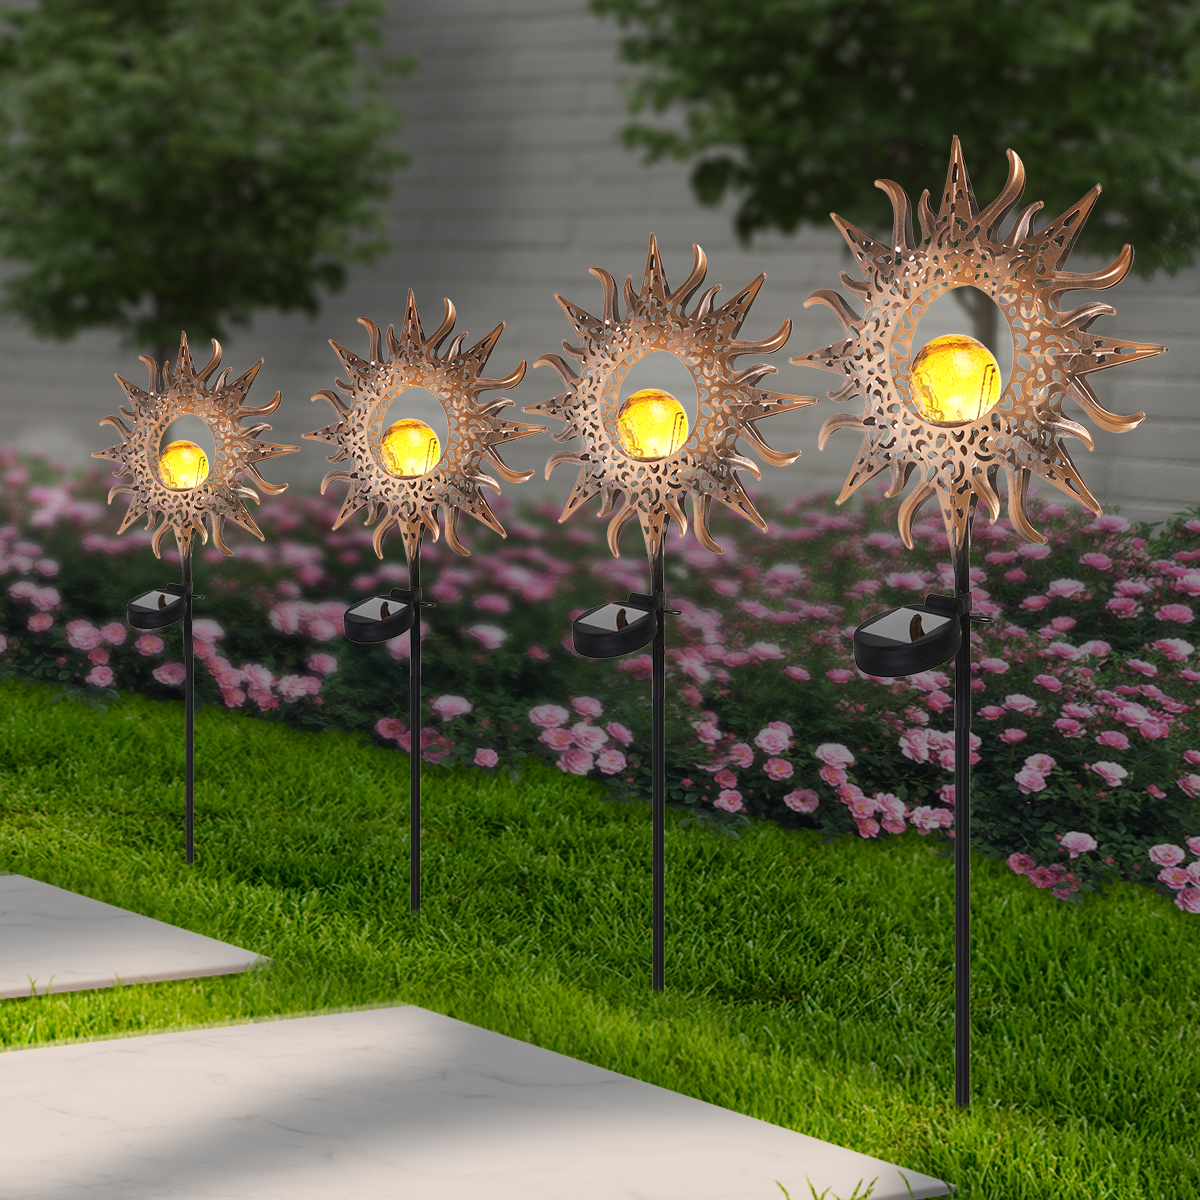 Outdoor-Wrought-Iron-Ground-Plug-Solar-Lawn-Lamp-Golden-Sun-Retro-Hollow-Courtyard-Landscape-Project-1793910-9